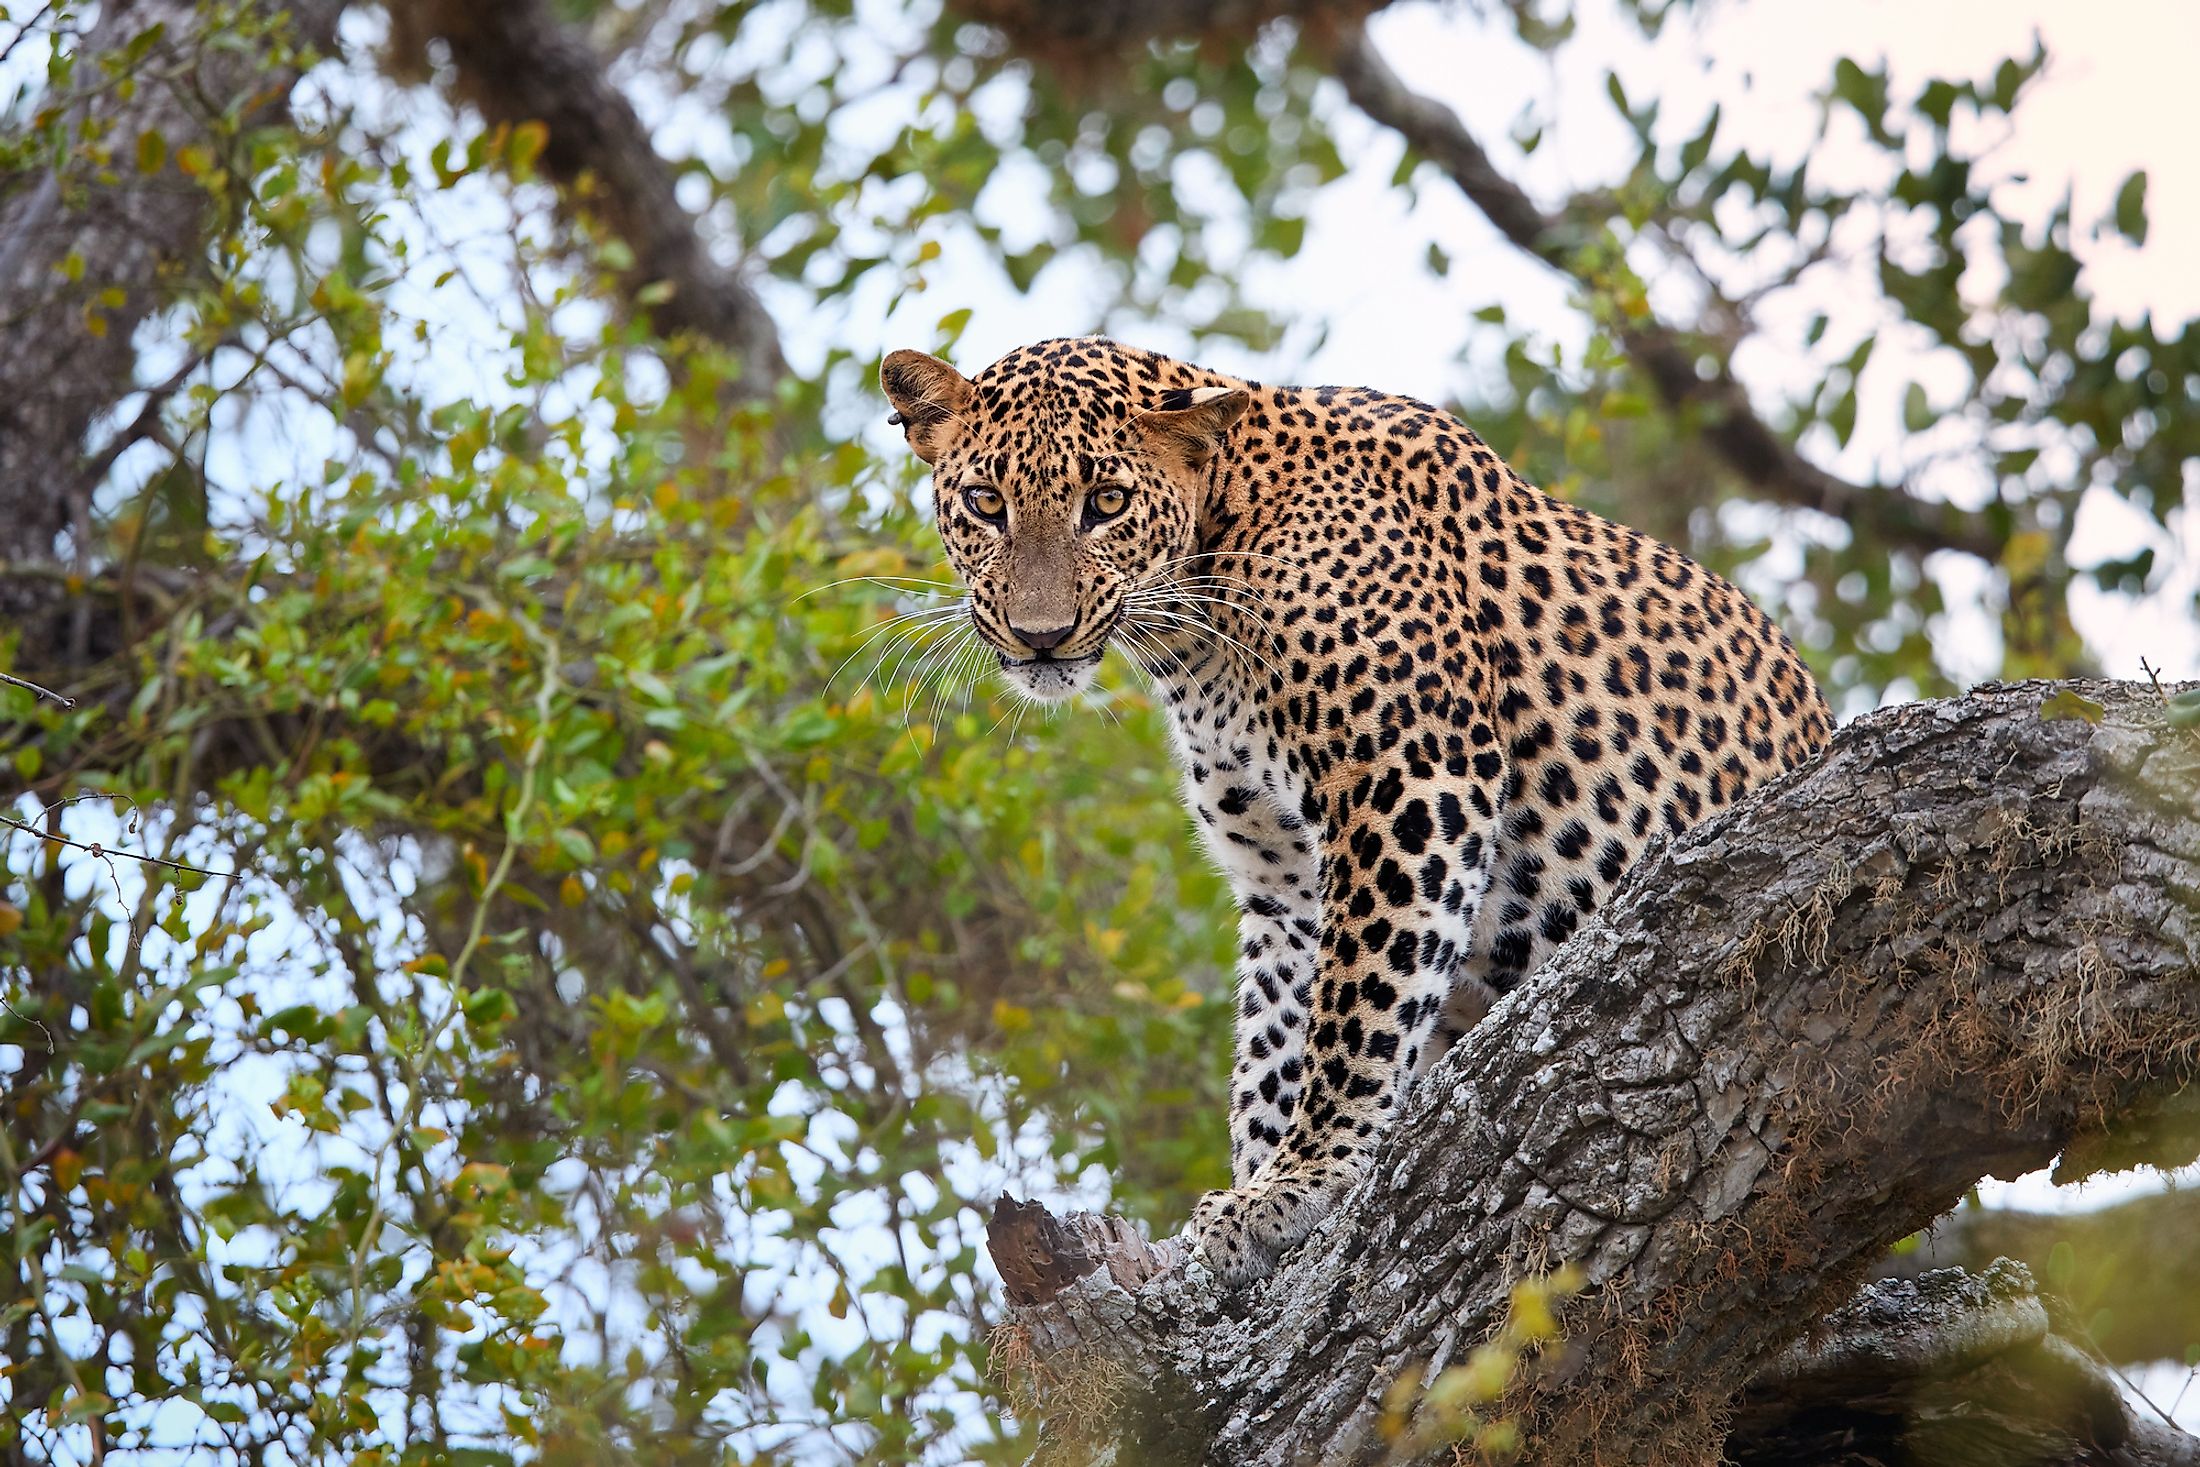 A leopard in the Yala National Park, Sri Lanka.